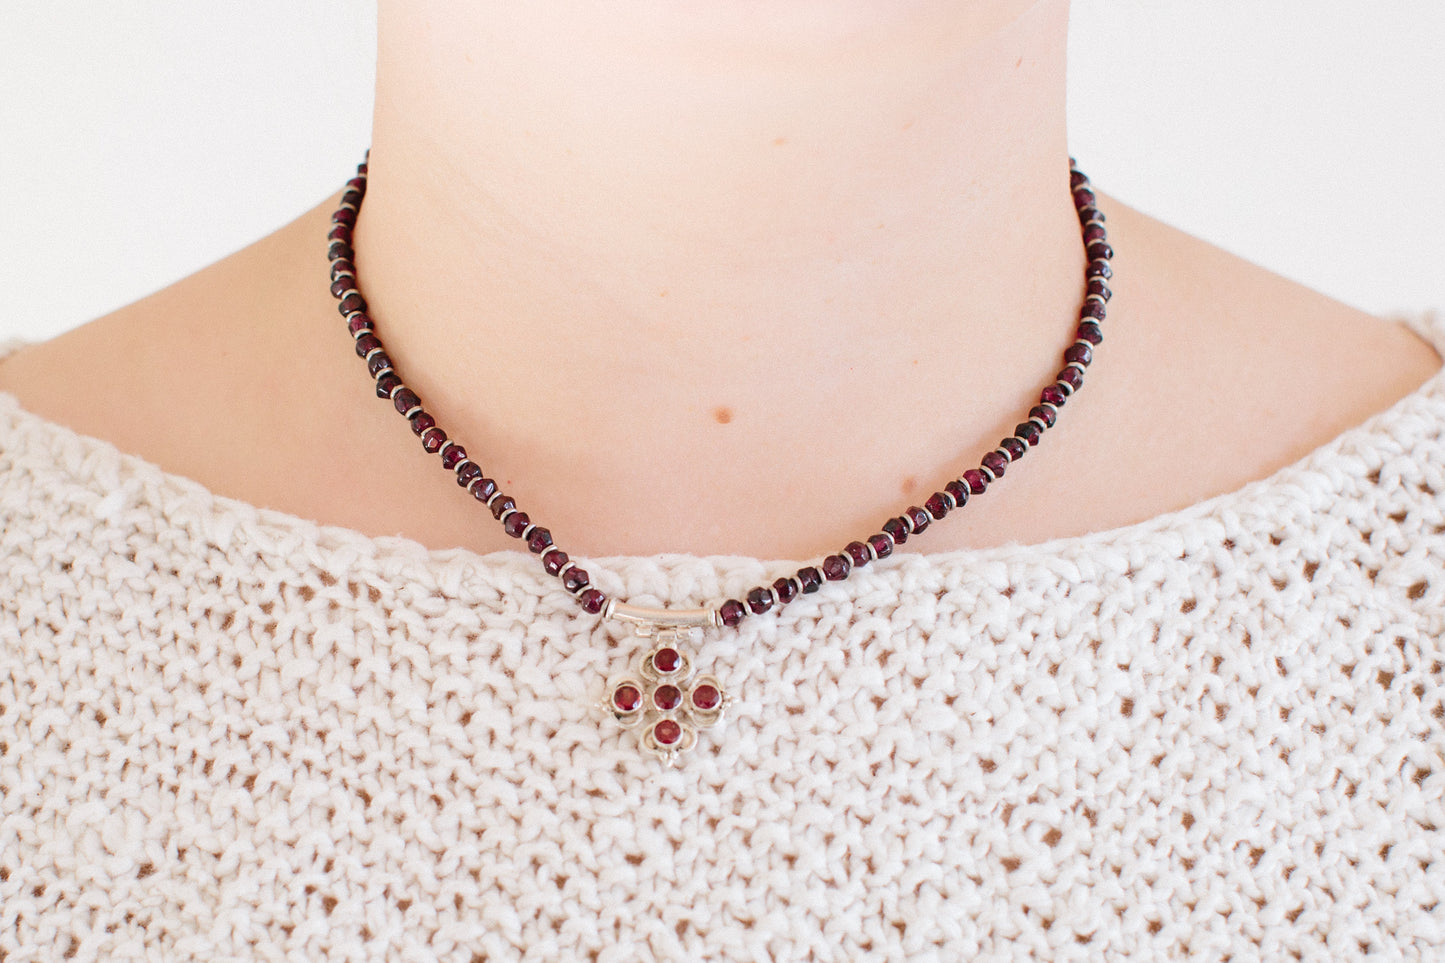 Diani Precious Stones Necklace, Garnet